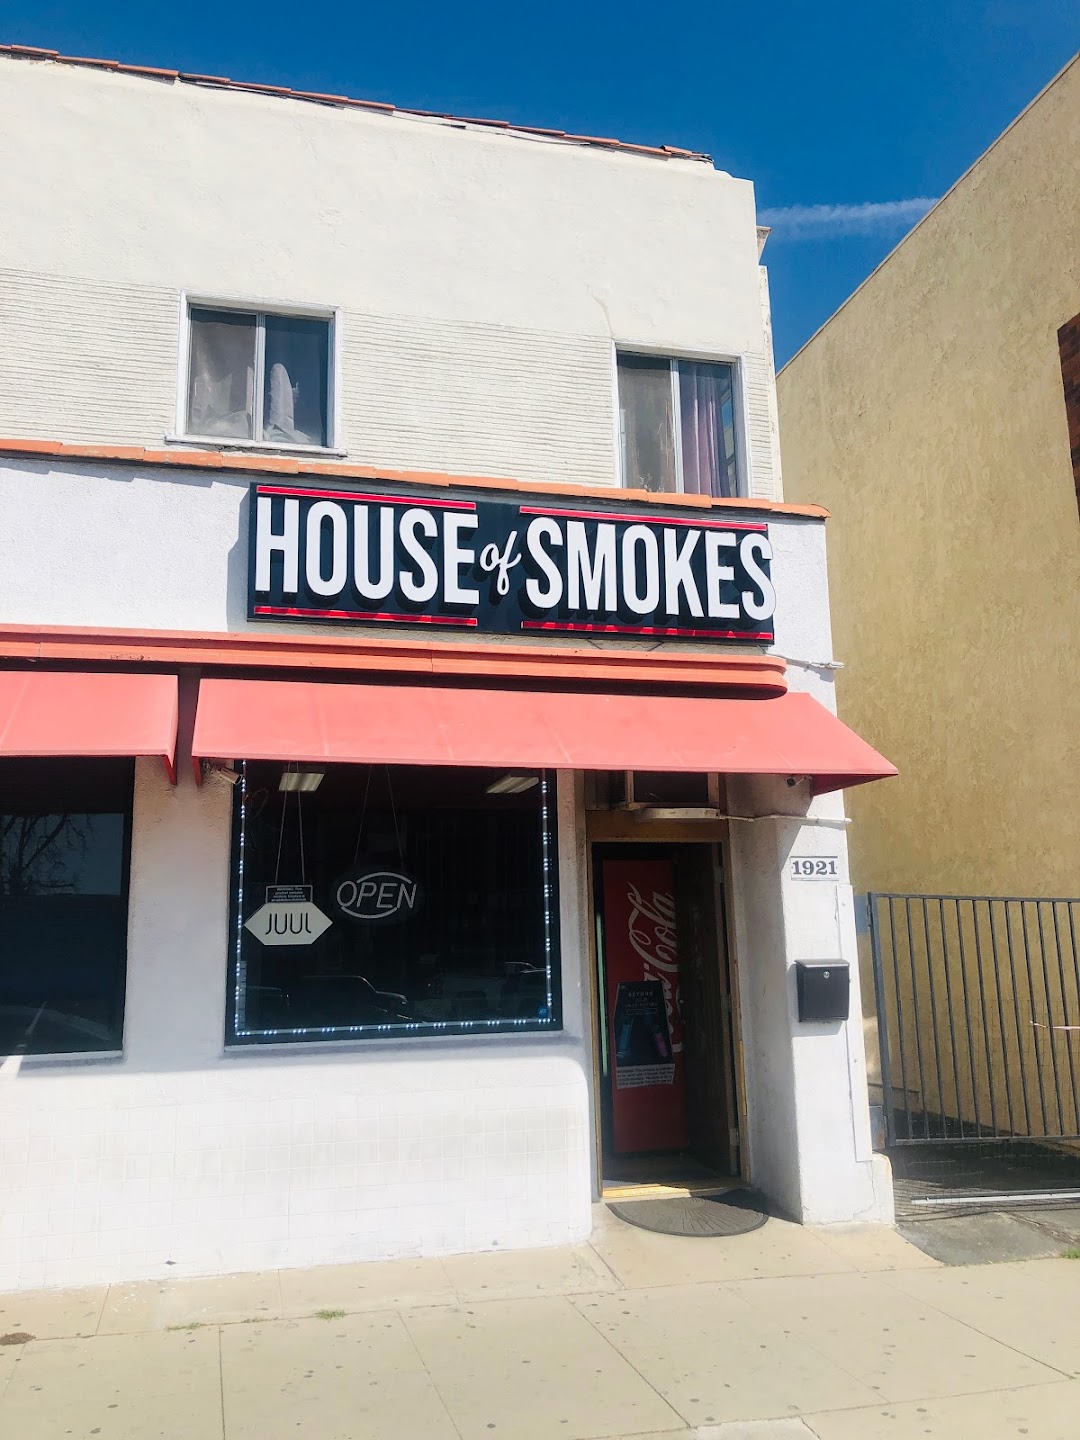 HOUSE OF SMOKES